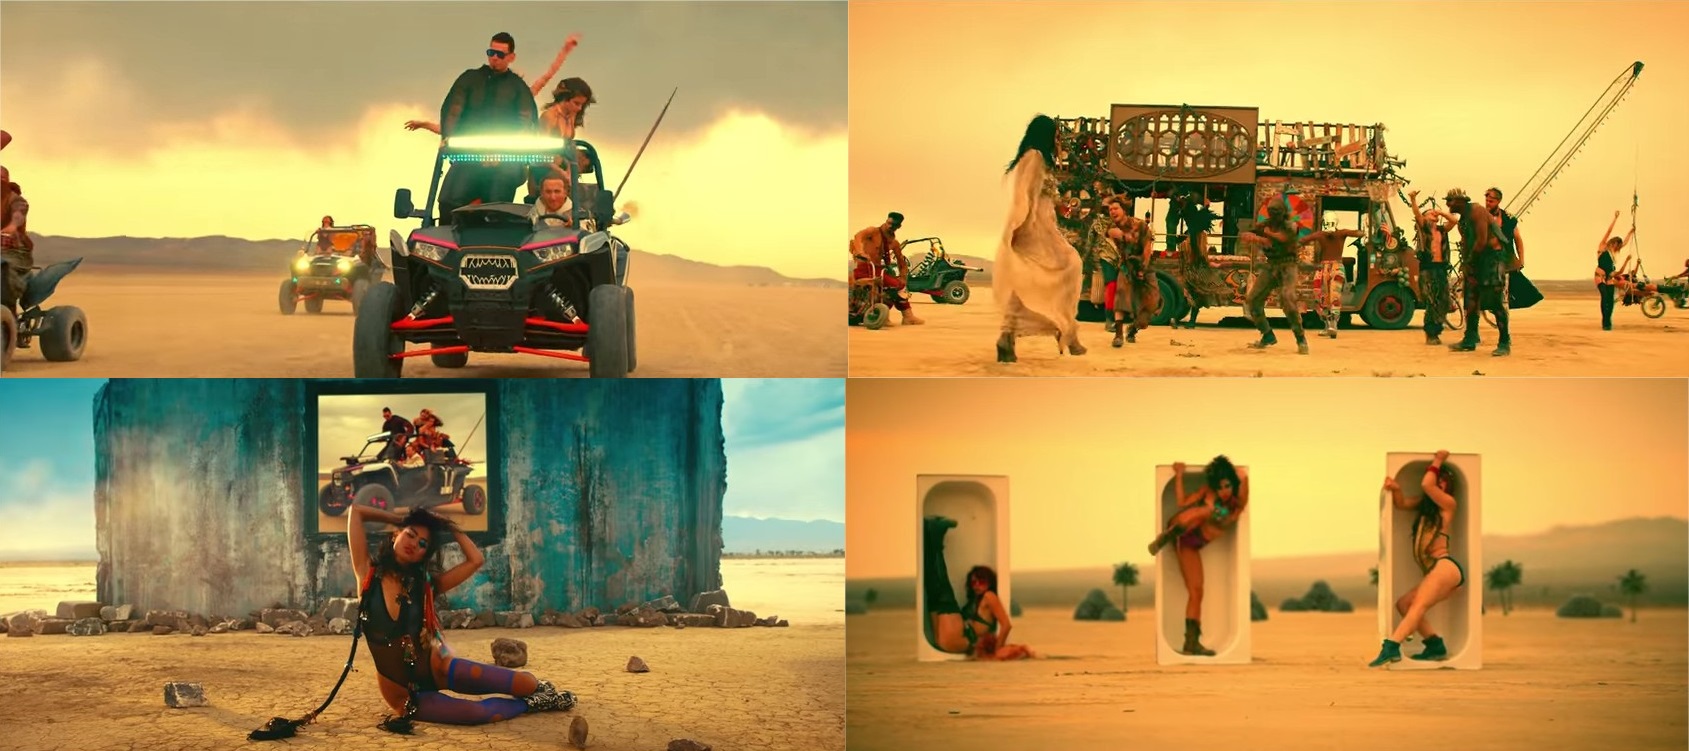 David Guetta - Hey Mama (Official Video) ft Nicki Minaj, Bebe Rexha & Afrojack - YouTube - Google Chrome_2